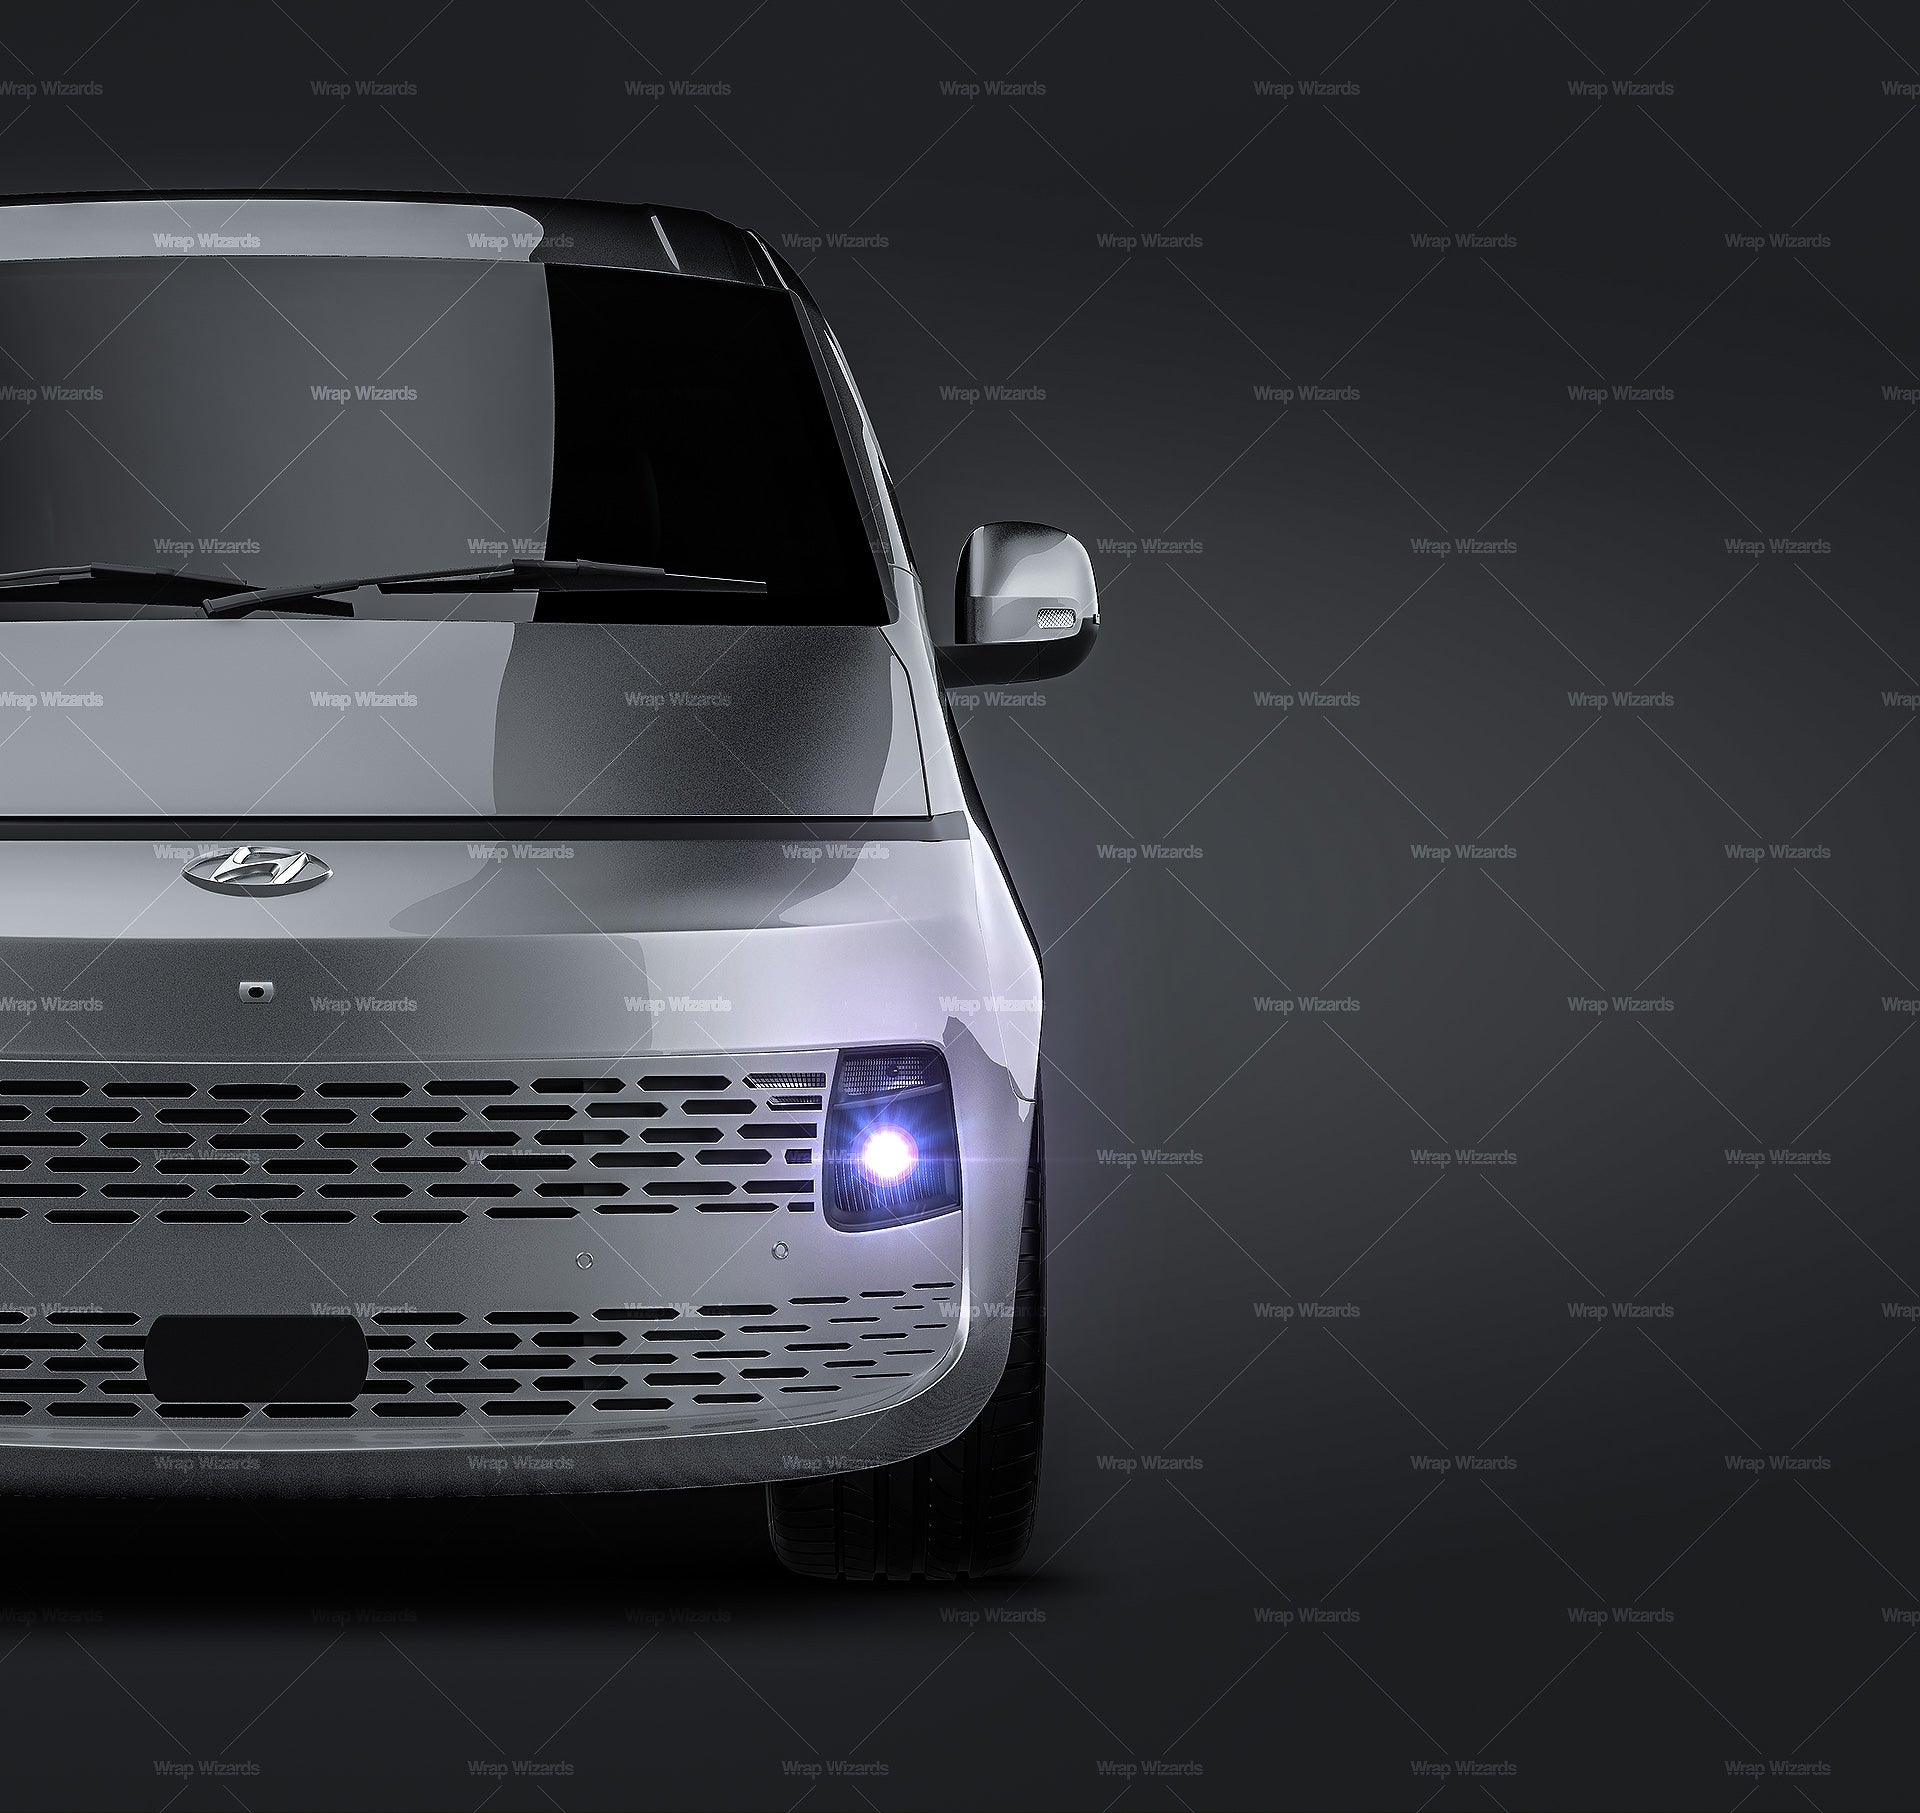 2022 Hyundai Staria Load 100% Vector template now available at  www.pxlsrs.com #hyundai #staria #hyundaistaria #van #template #vehiclewrap…